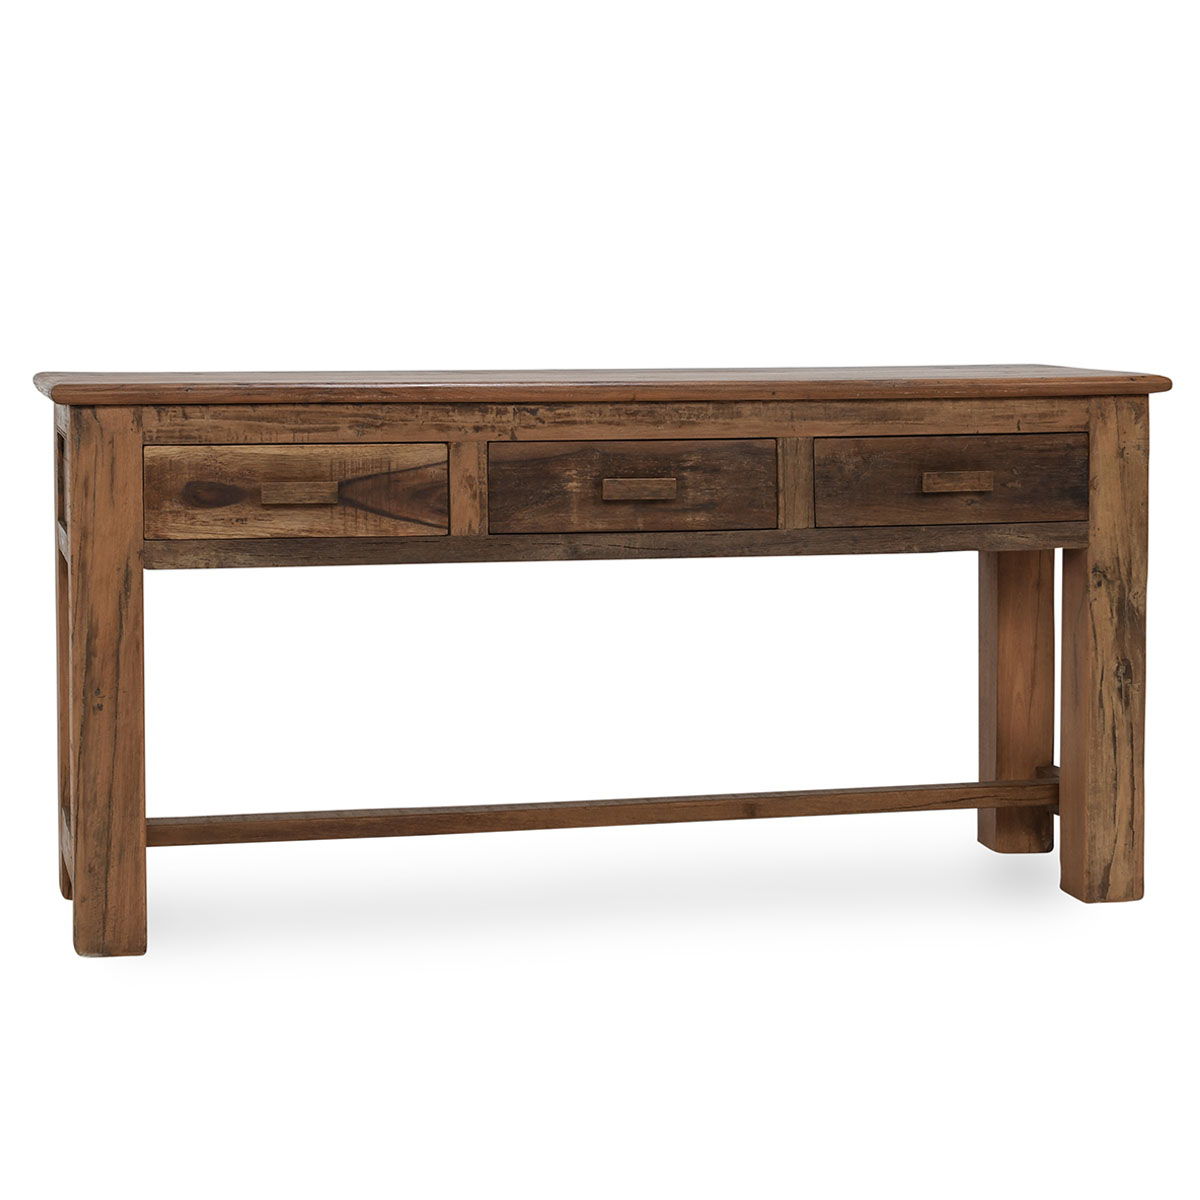 Ezra - Reclaimed Wood Console Table